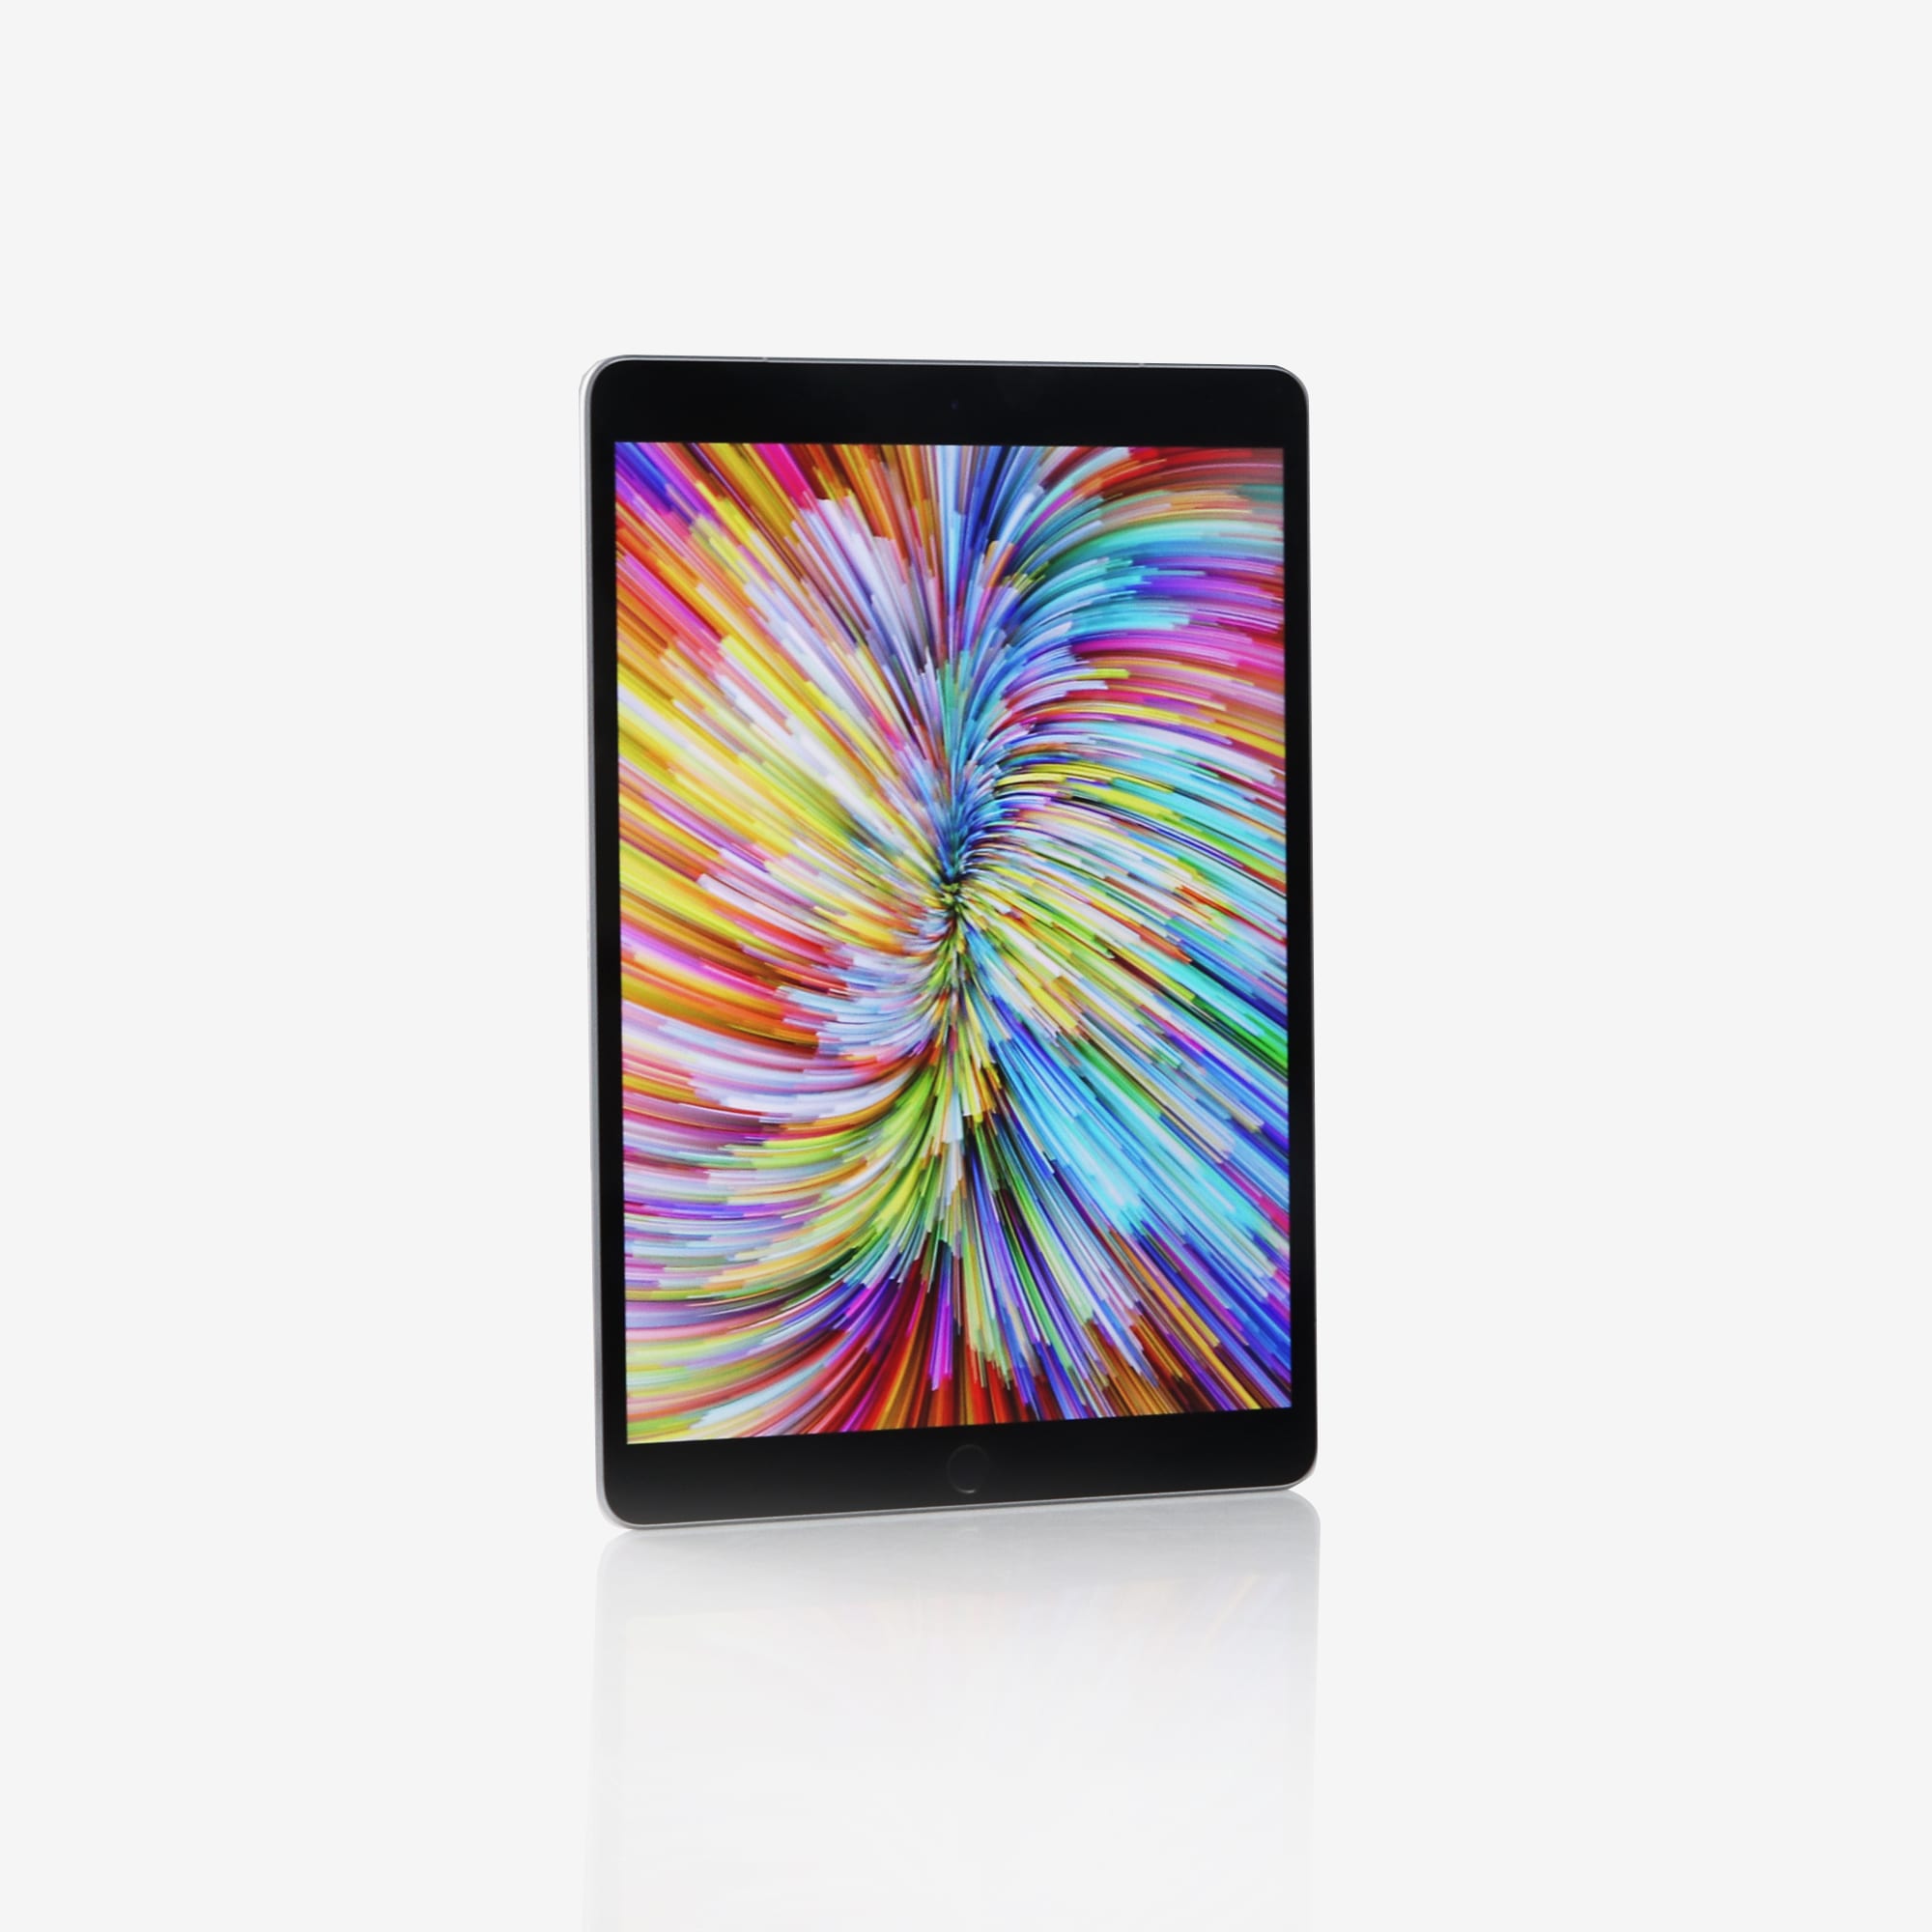 1 x iPad Pro (10.5-inch) (Wi-Fi + Cellular) Space Grey (2017)